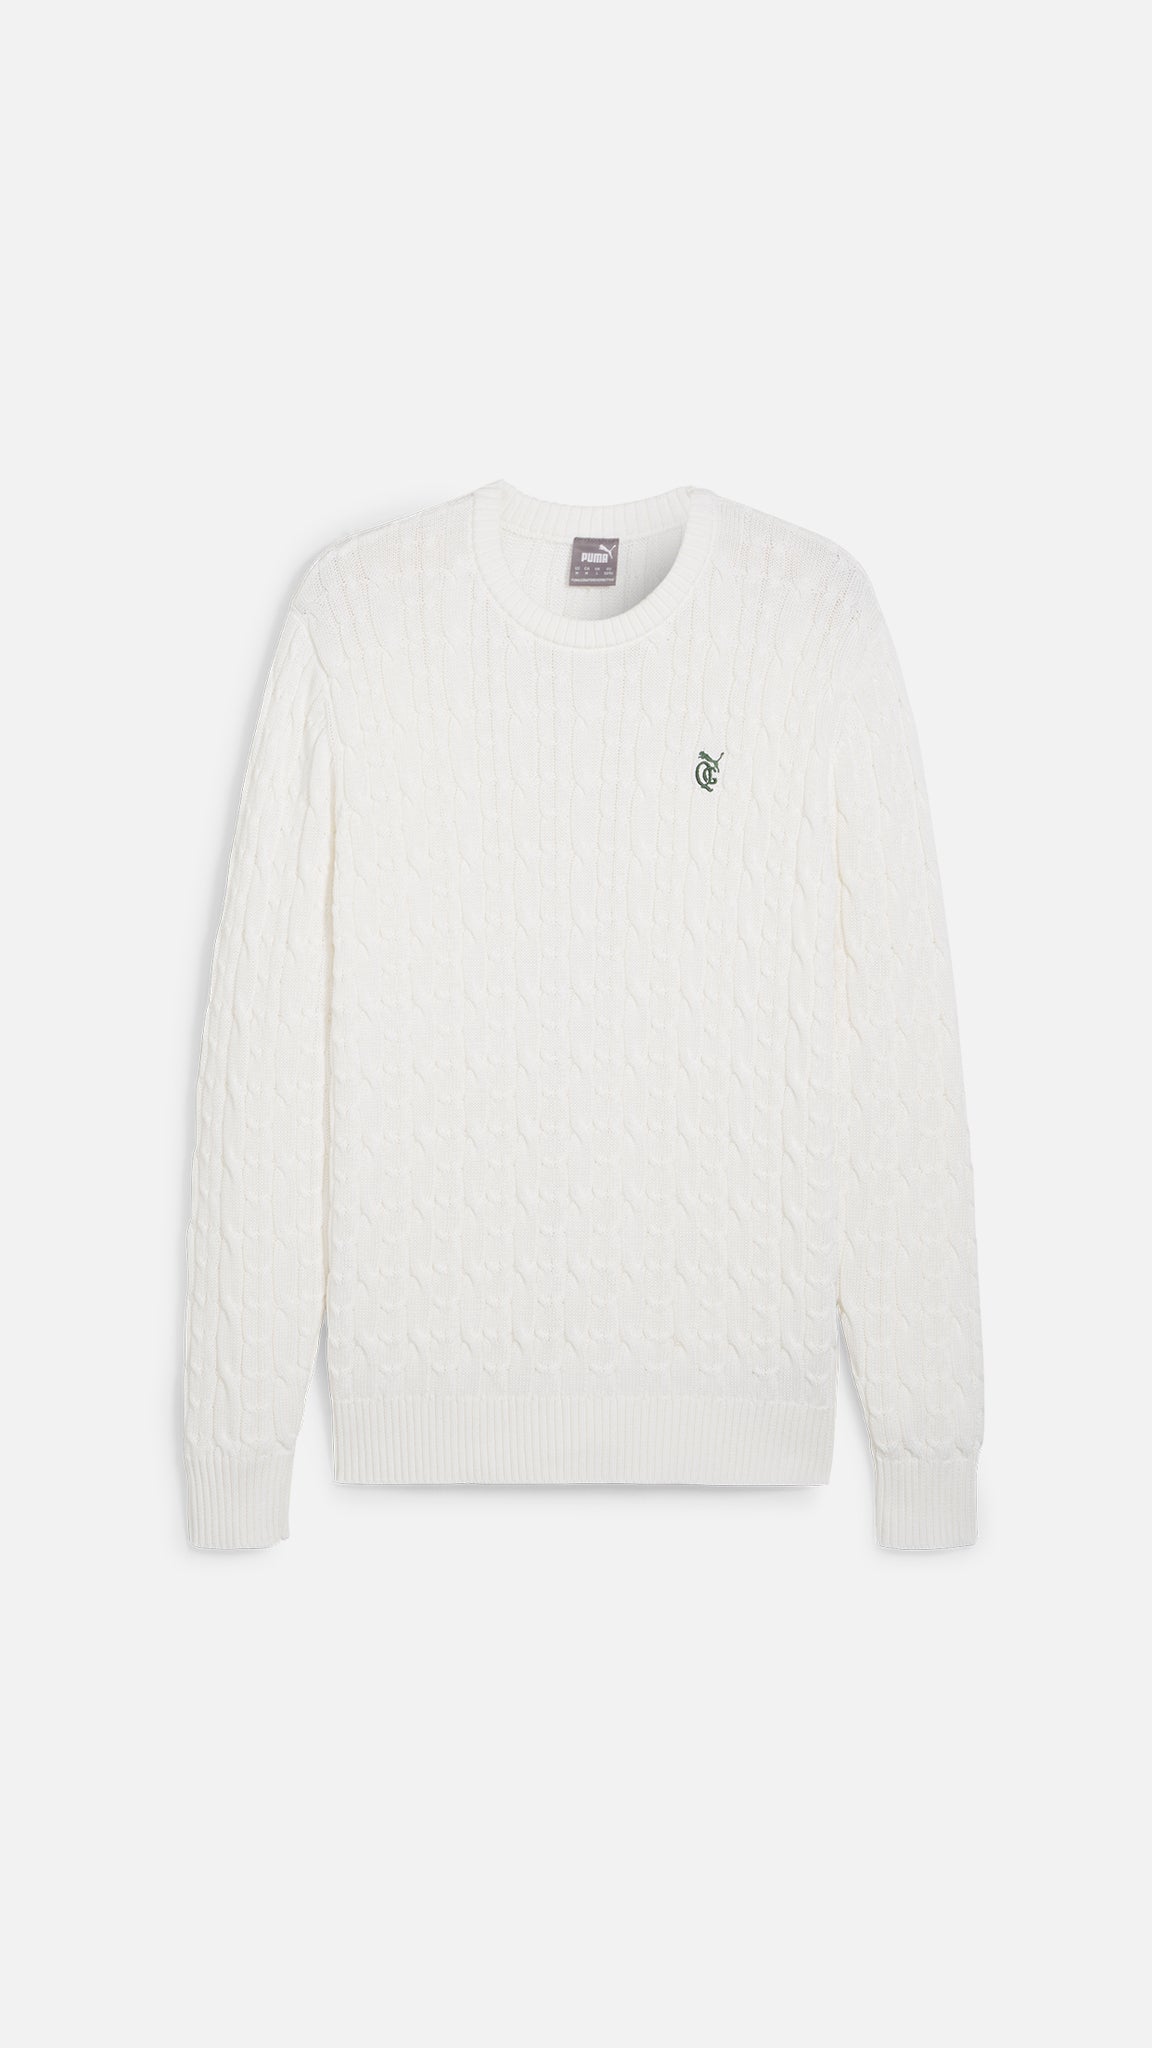 Puma X QGC Cable Knit Sweater Warm White